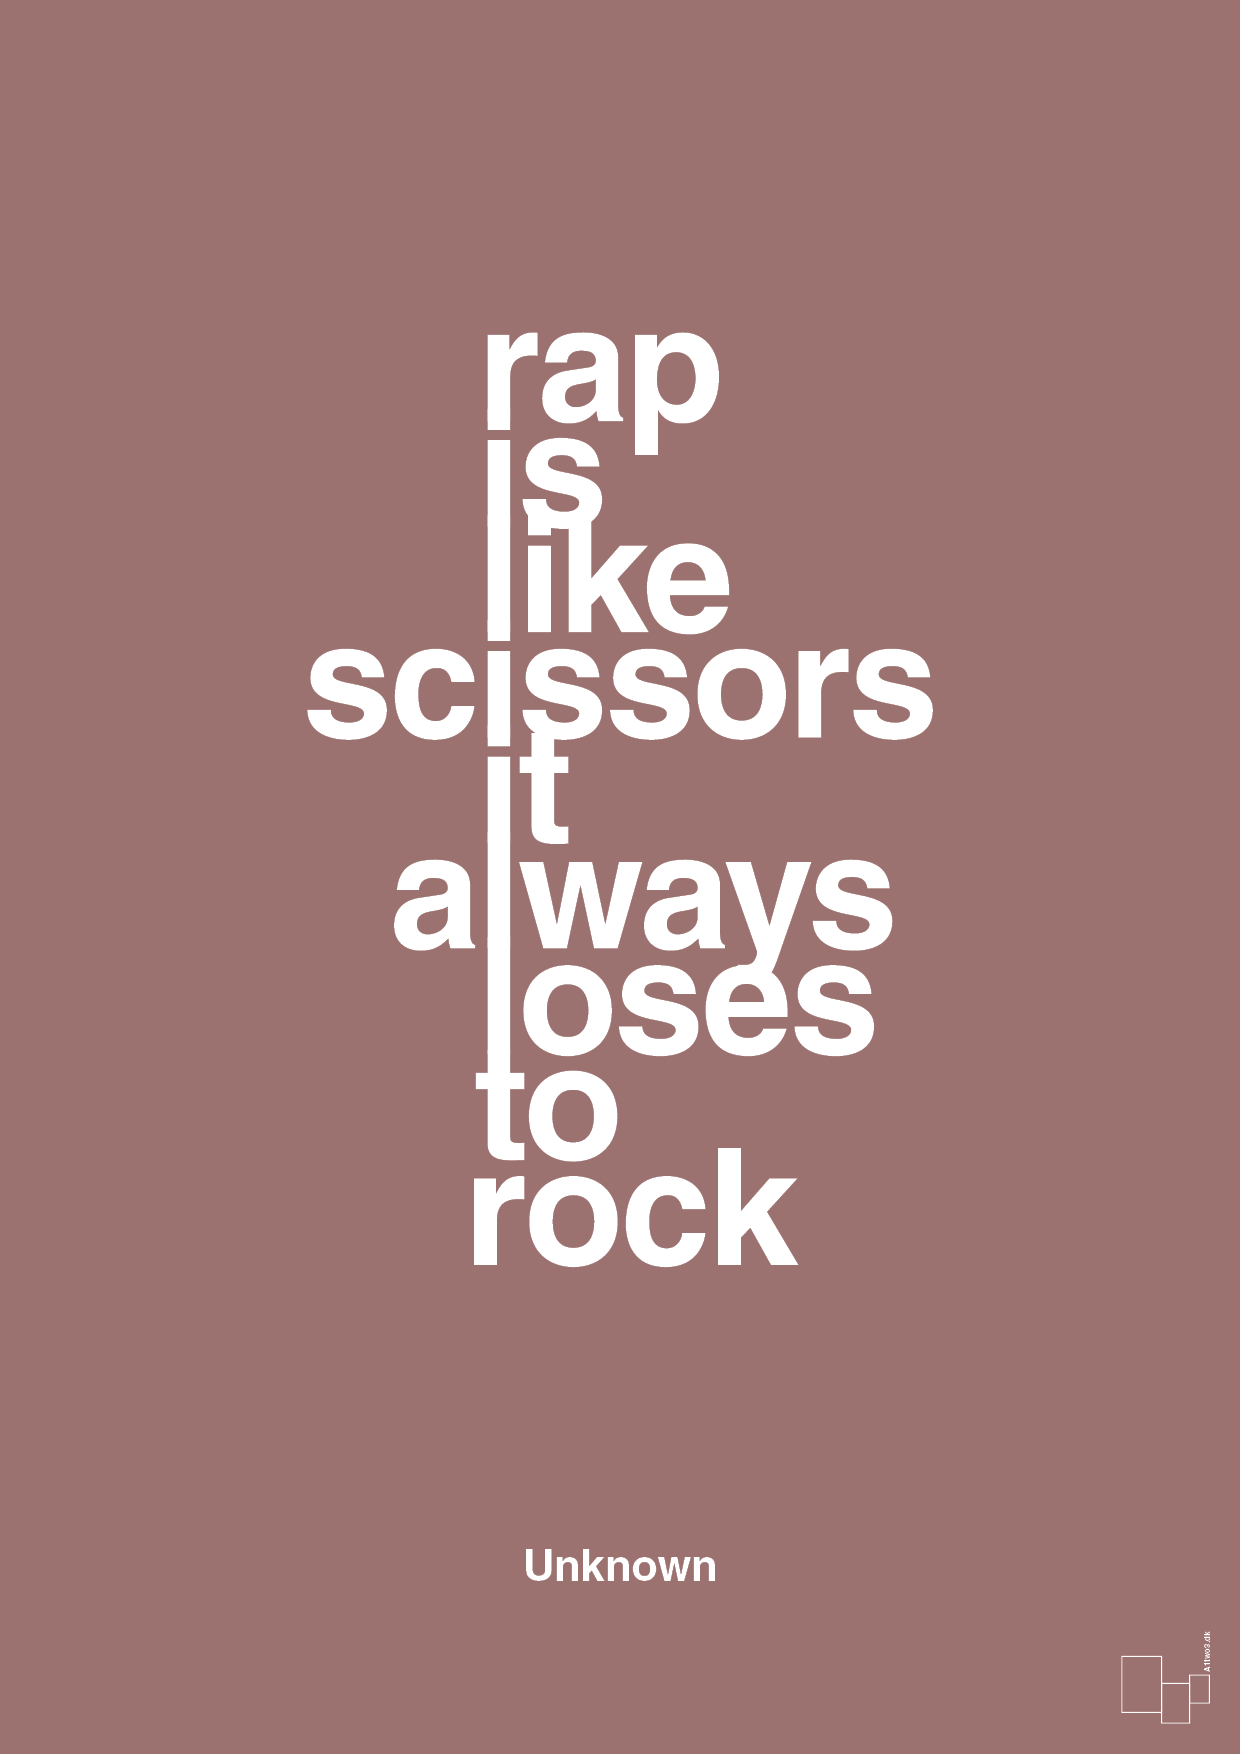 rap is like scissors it always loses to rock - Plakat med Citater i Plum